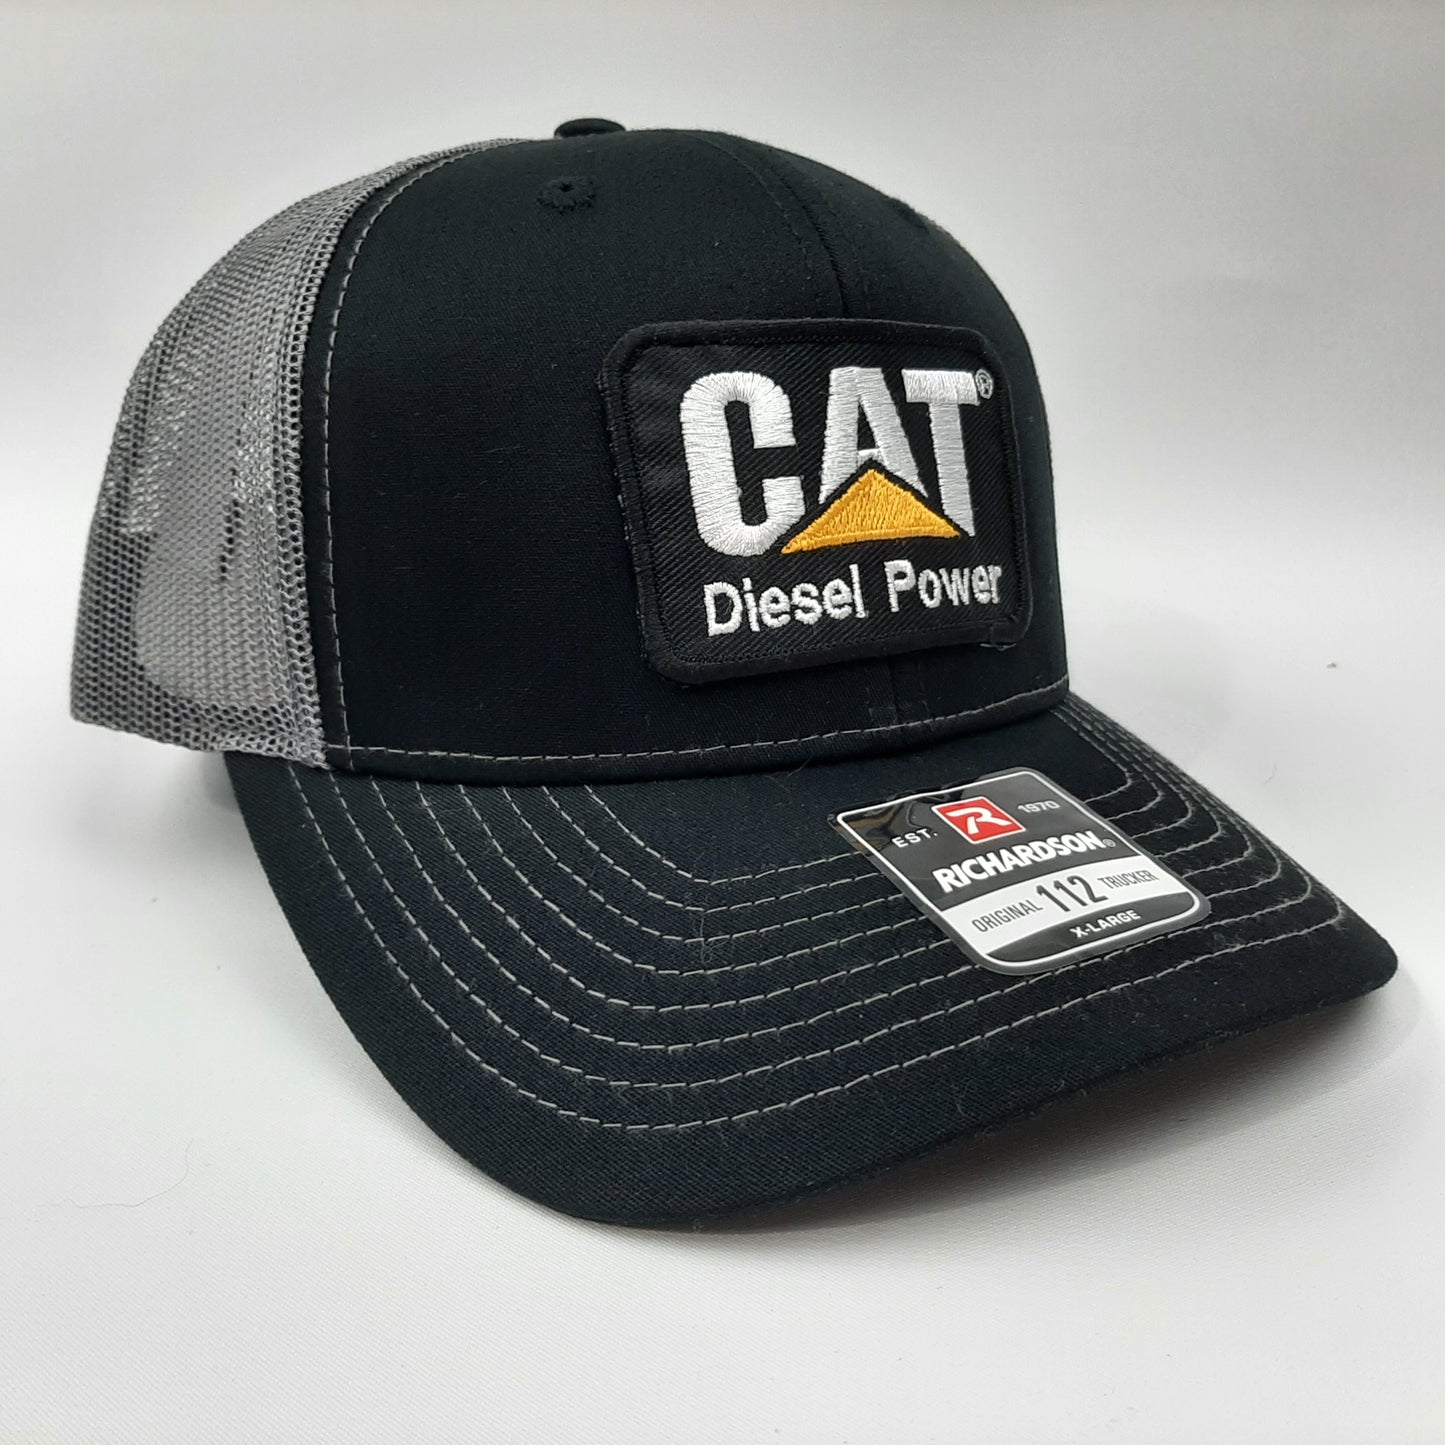 Richardson 112 CAT Caterpillar Patch Mesh Snapback Cap Hat Bi-Color Black & Gray